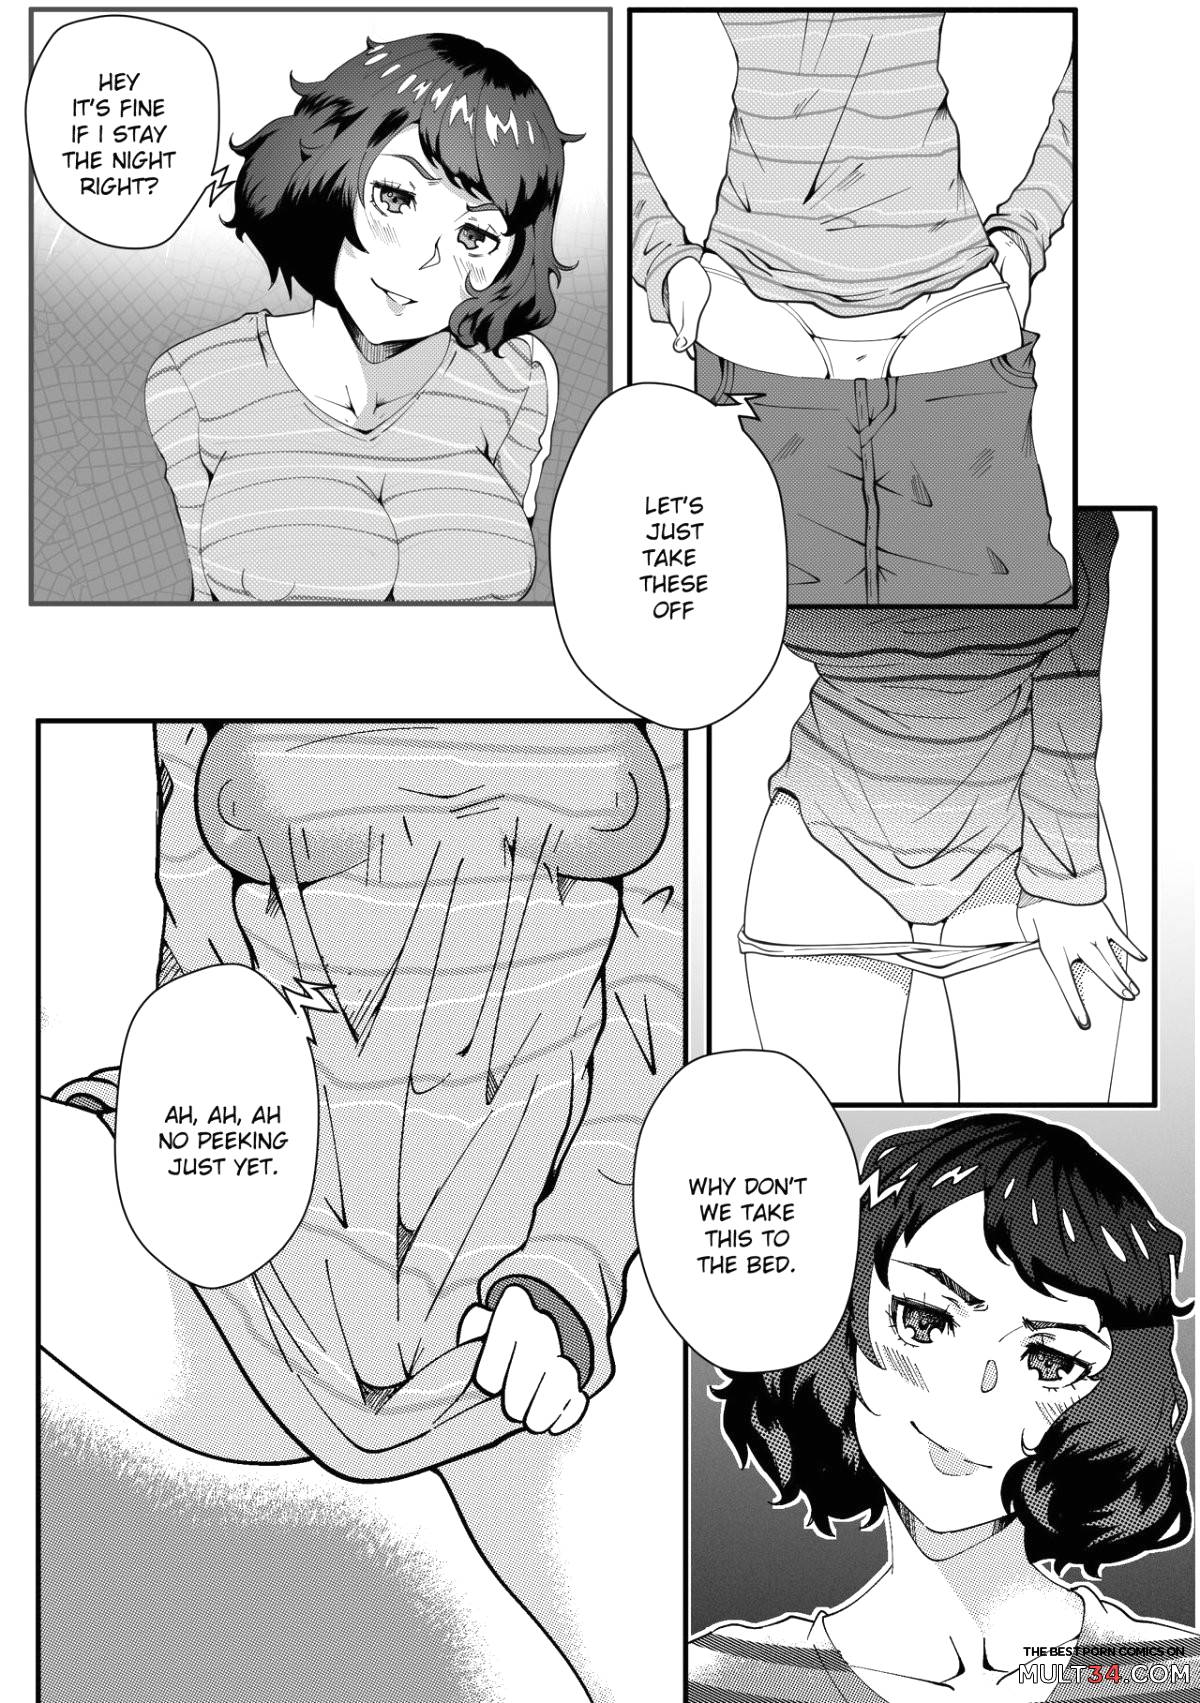 A Night With Kawakami page 3